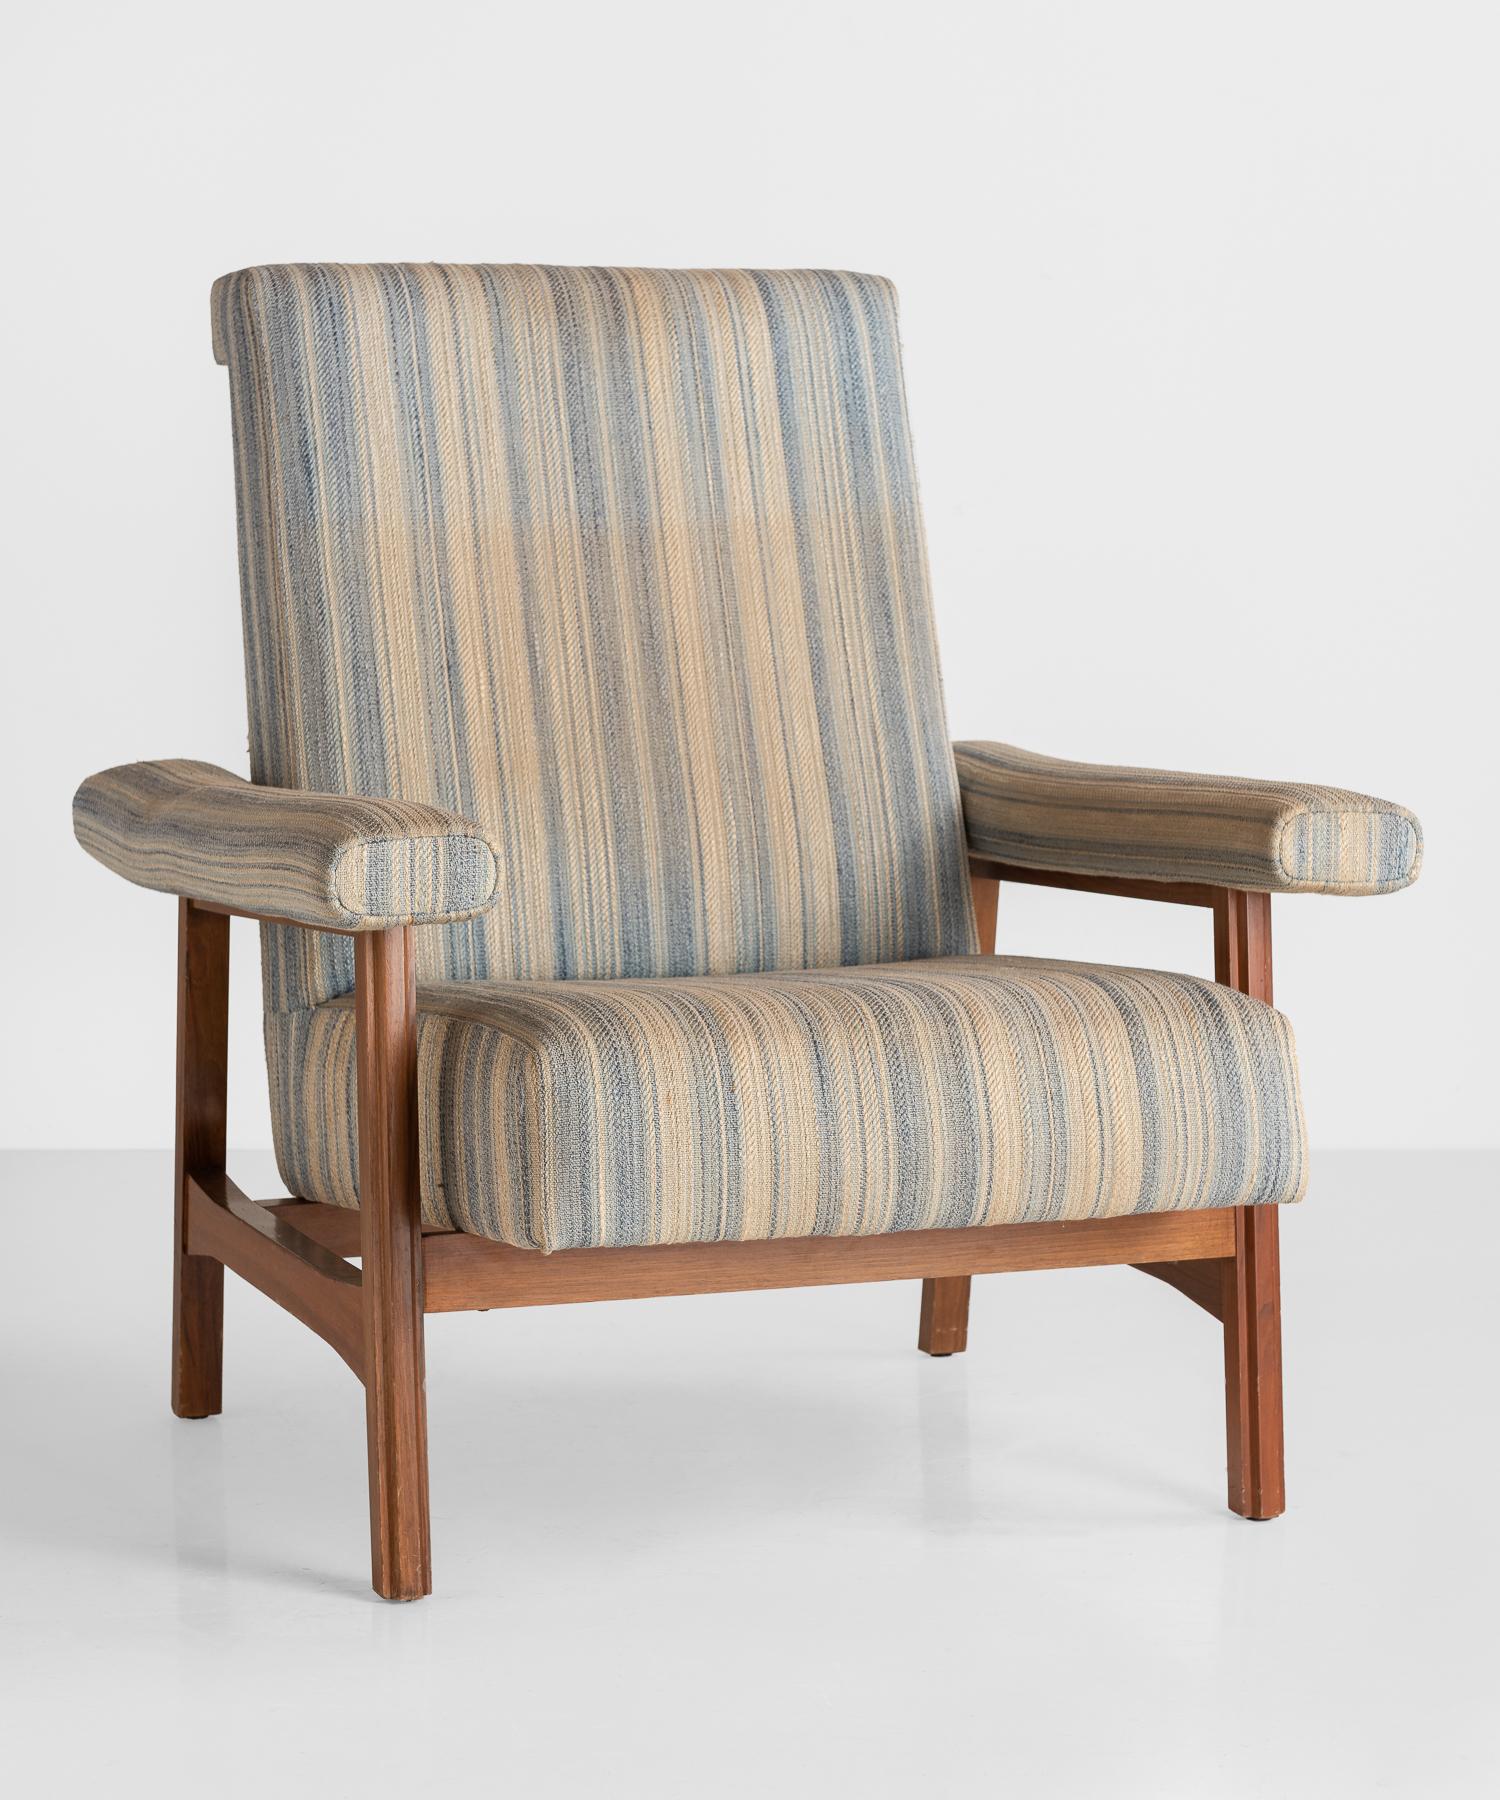 Modern teak armchair, Italy, circa 1960.

Original striped upholstery on teak base.